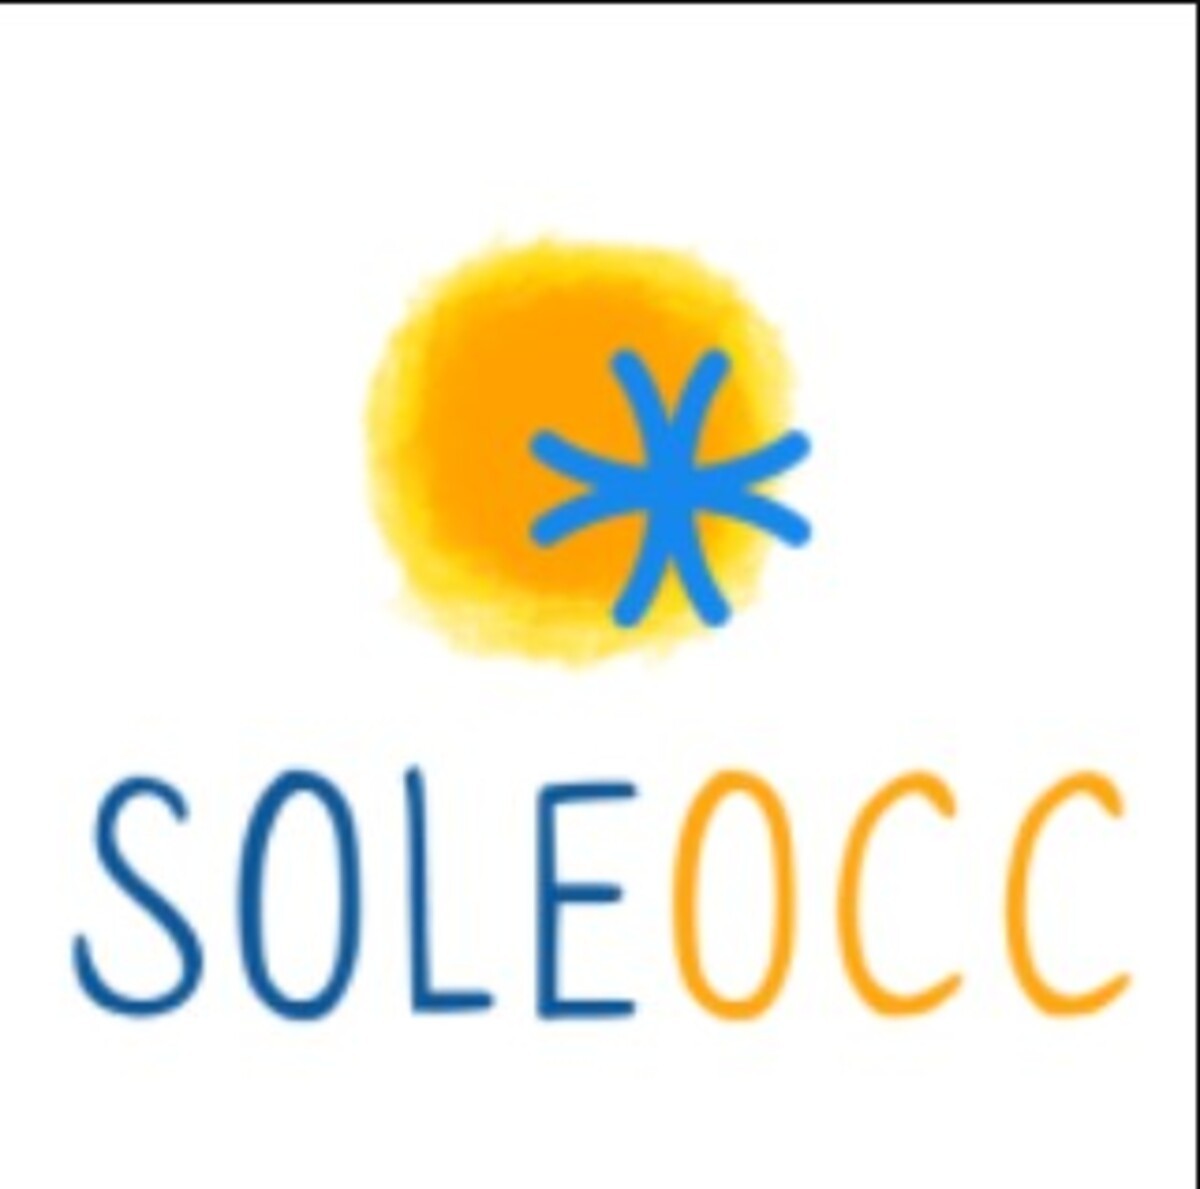 Soléocc